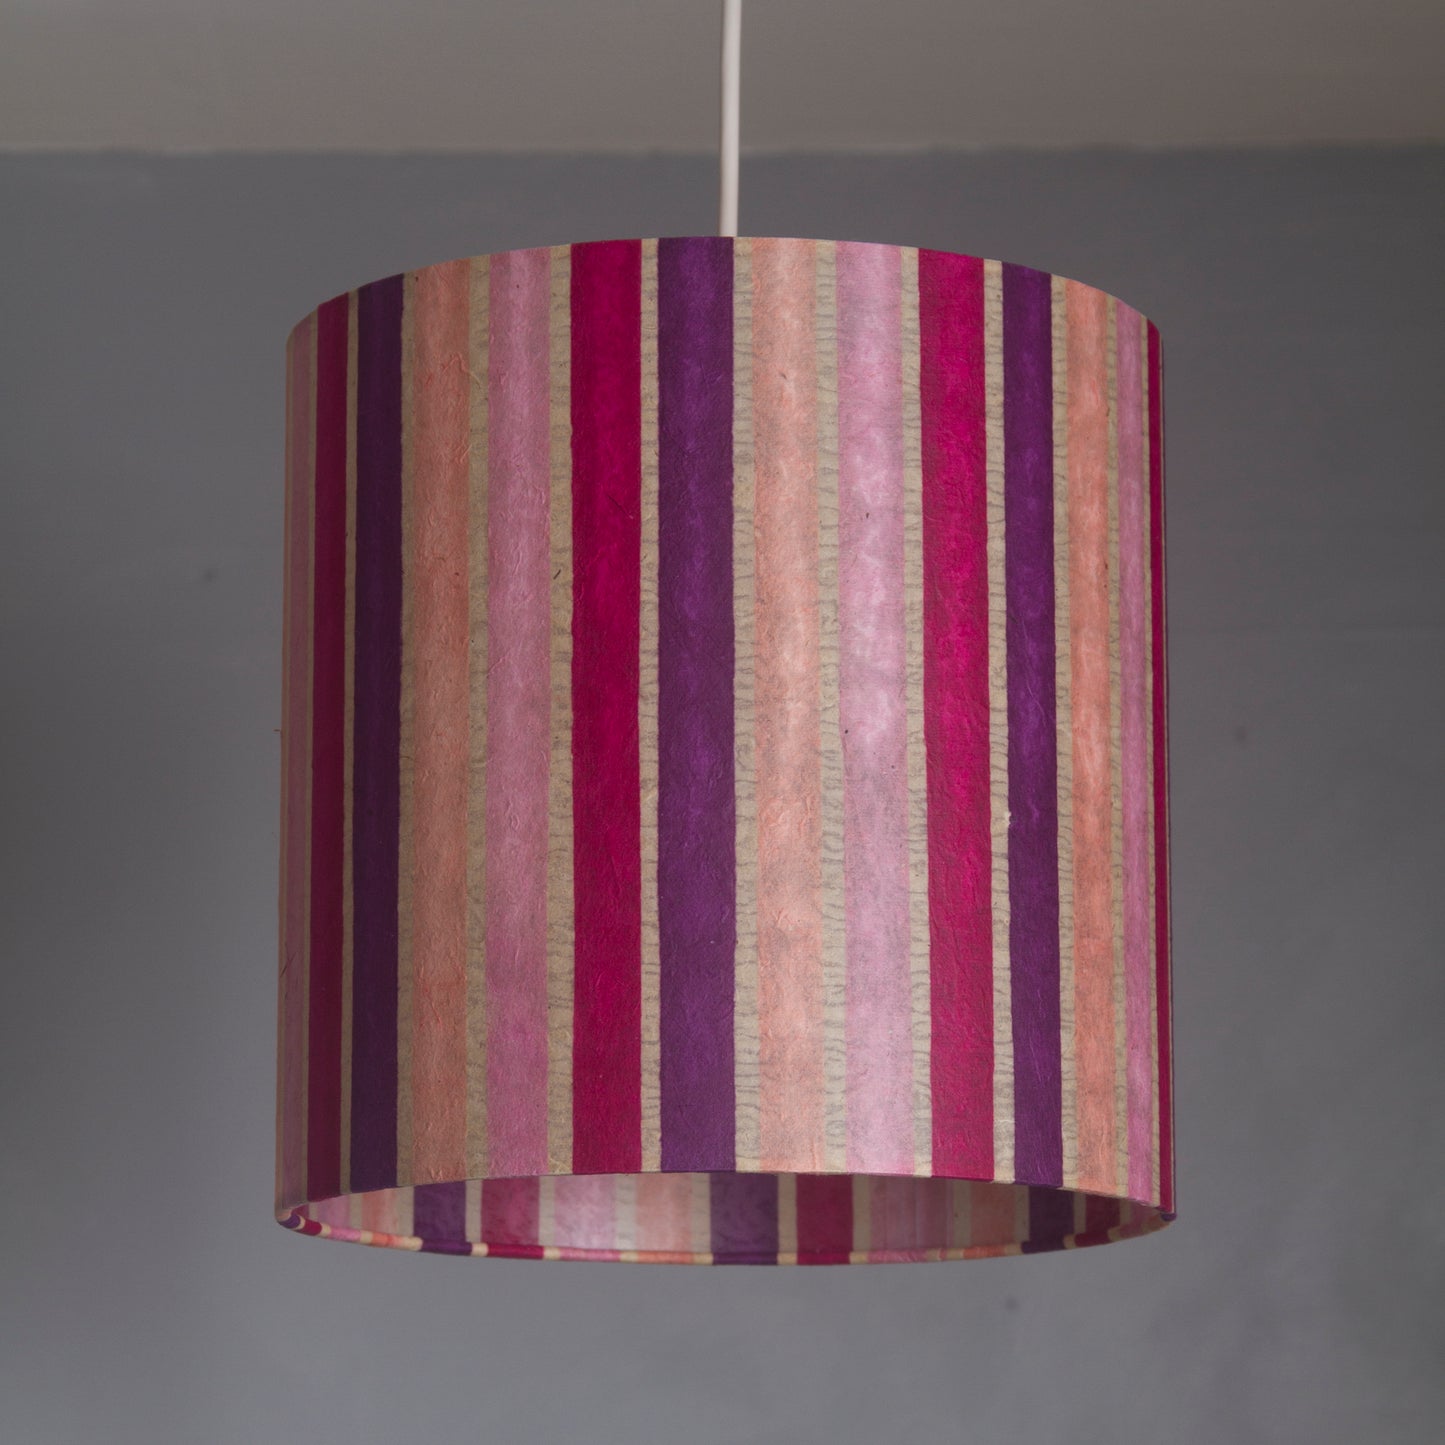 Oval Lamp Shade - P04 - Batik Stripes Pink, 20cm(w) x 20cm(h) x 13cm(d)